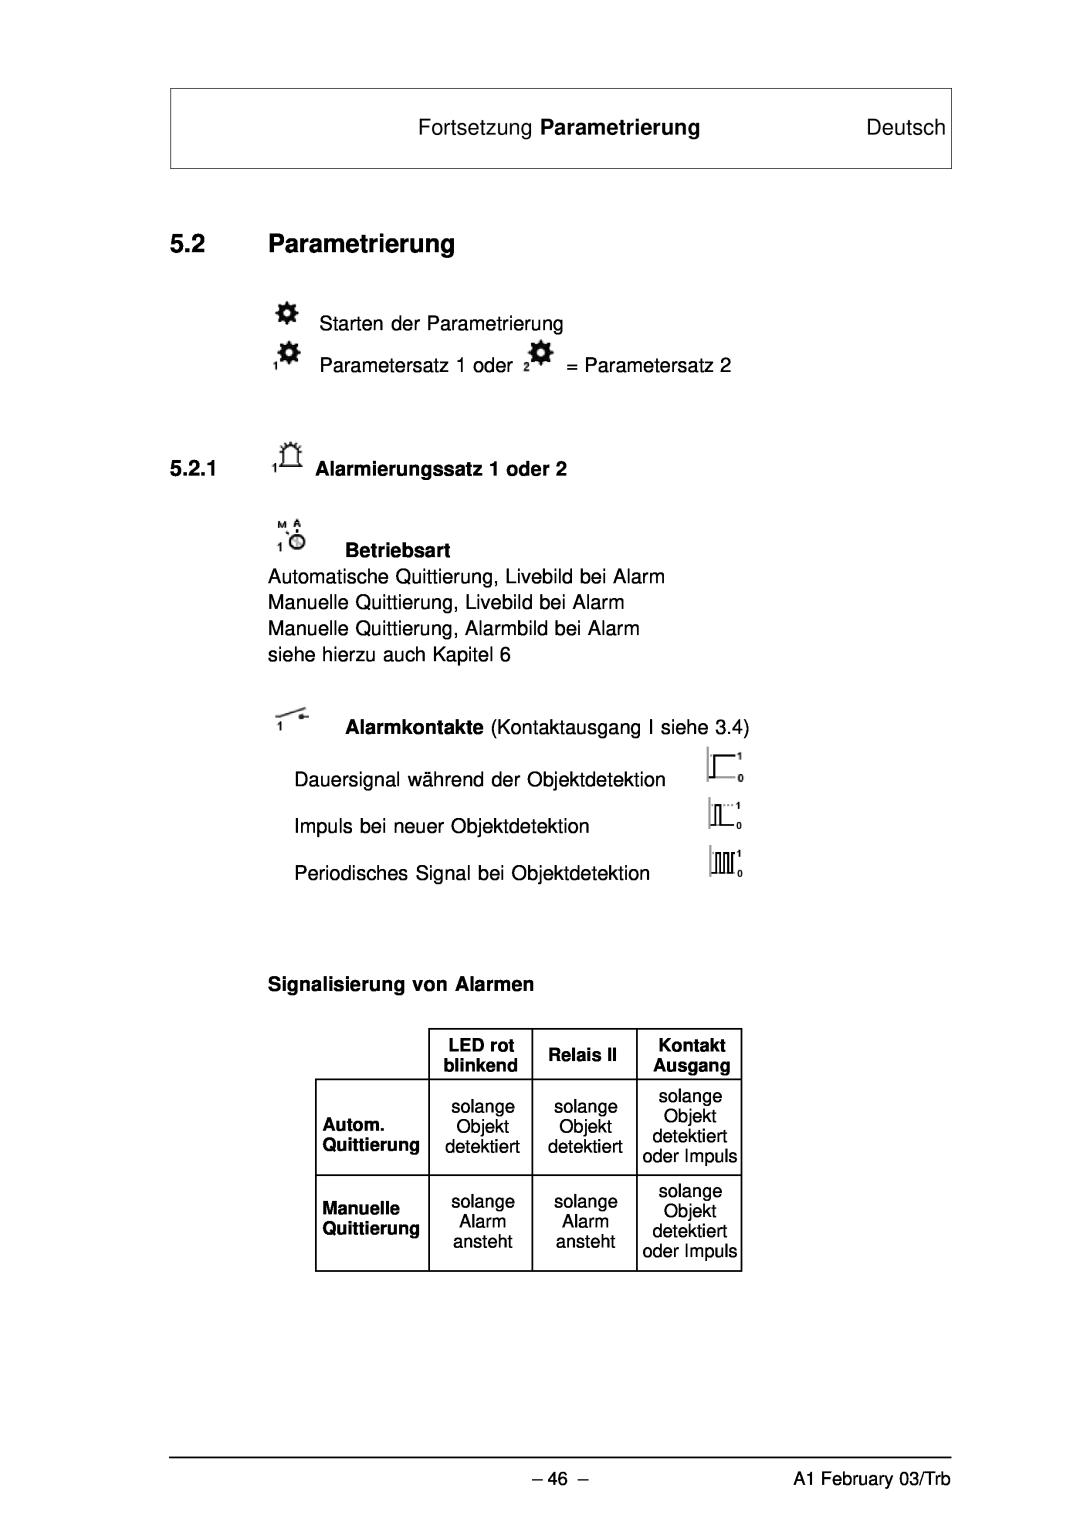 Bosch Appliances VMD01 M60 NTSC manual 5.2Parametrierung, Fortsetzung Parametrierung, Deutsch, Signalisierung von Alarmen 